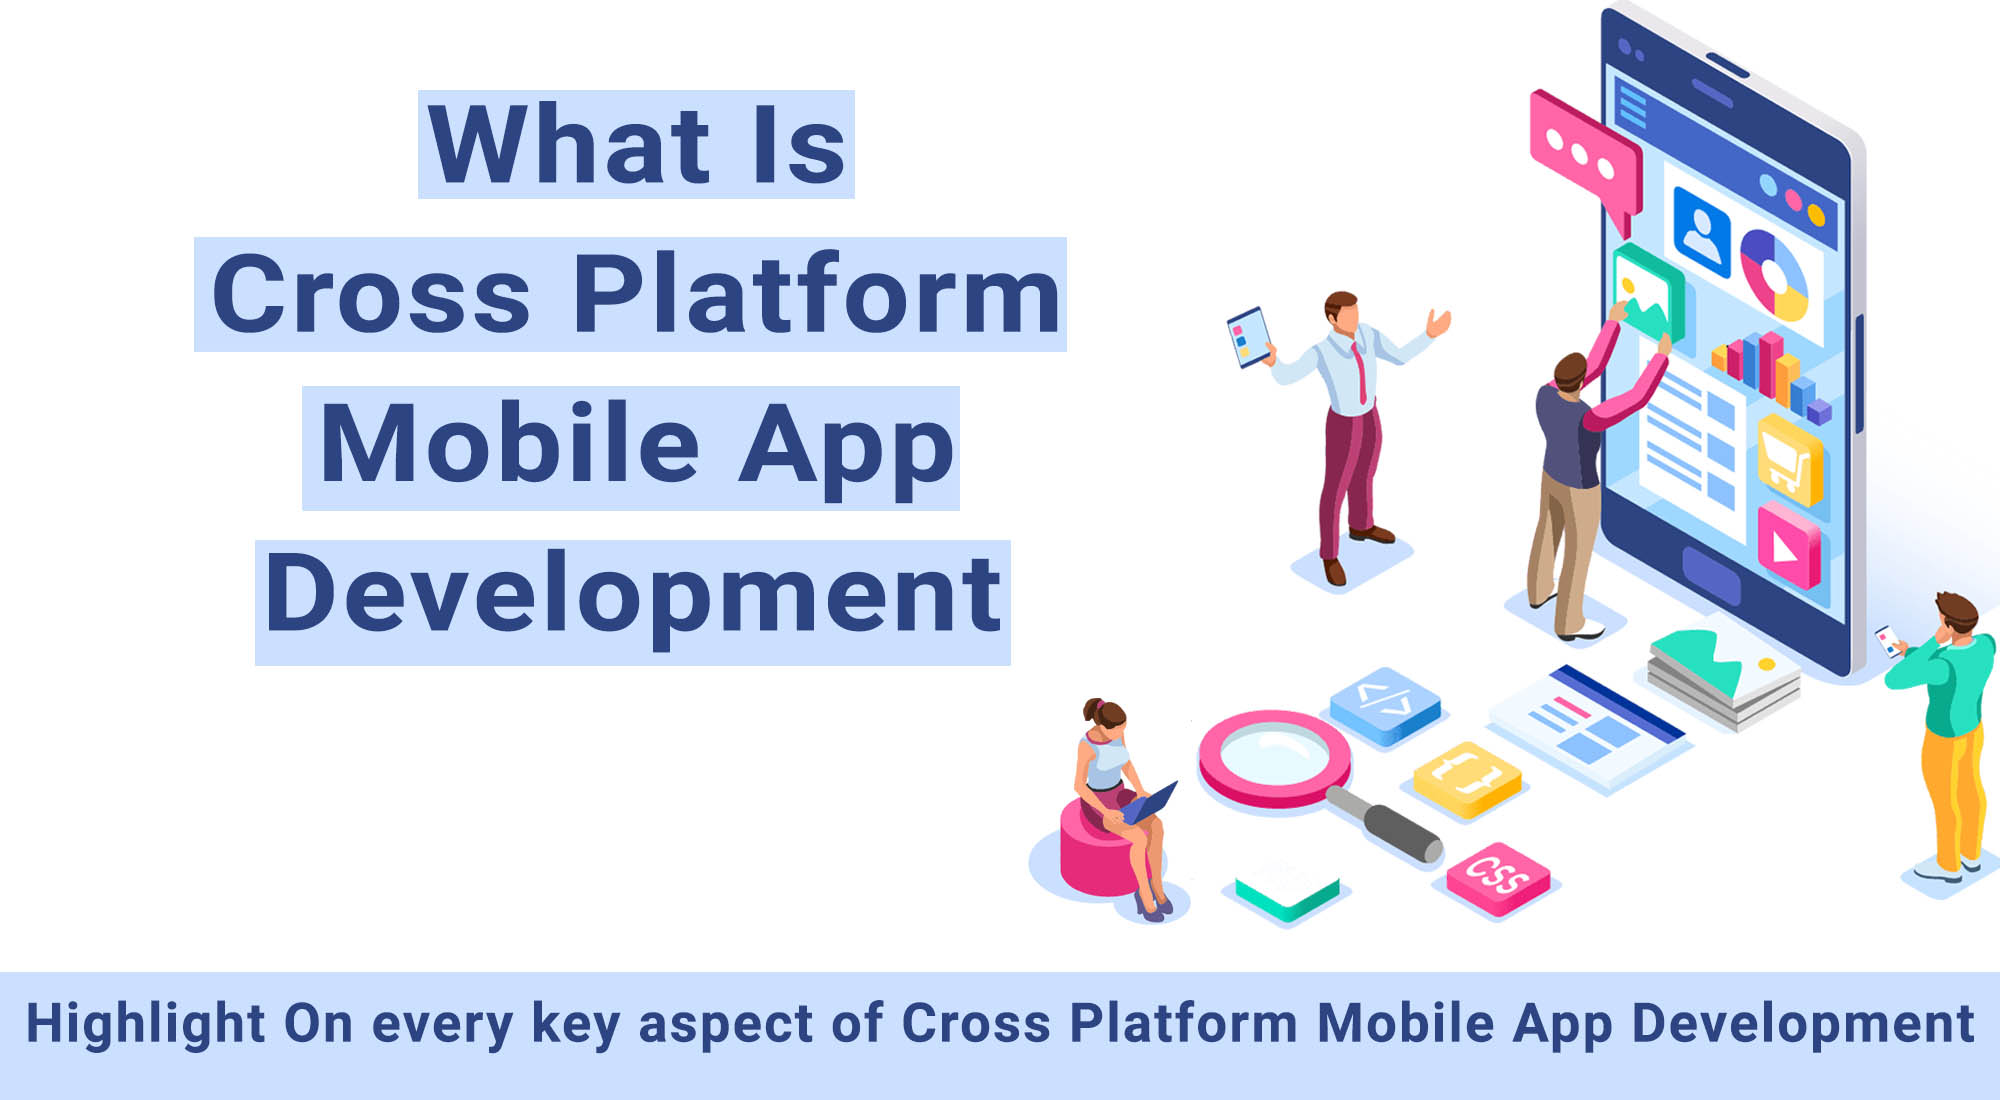 What is cross platform mobile app development